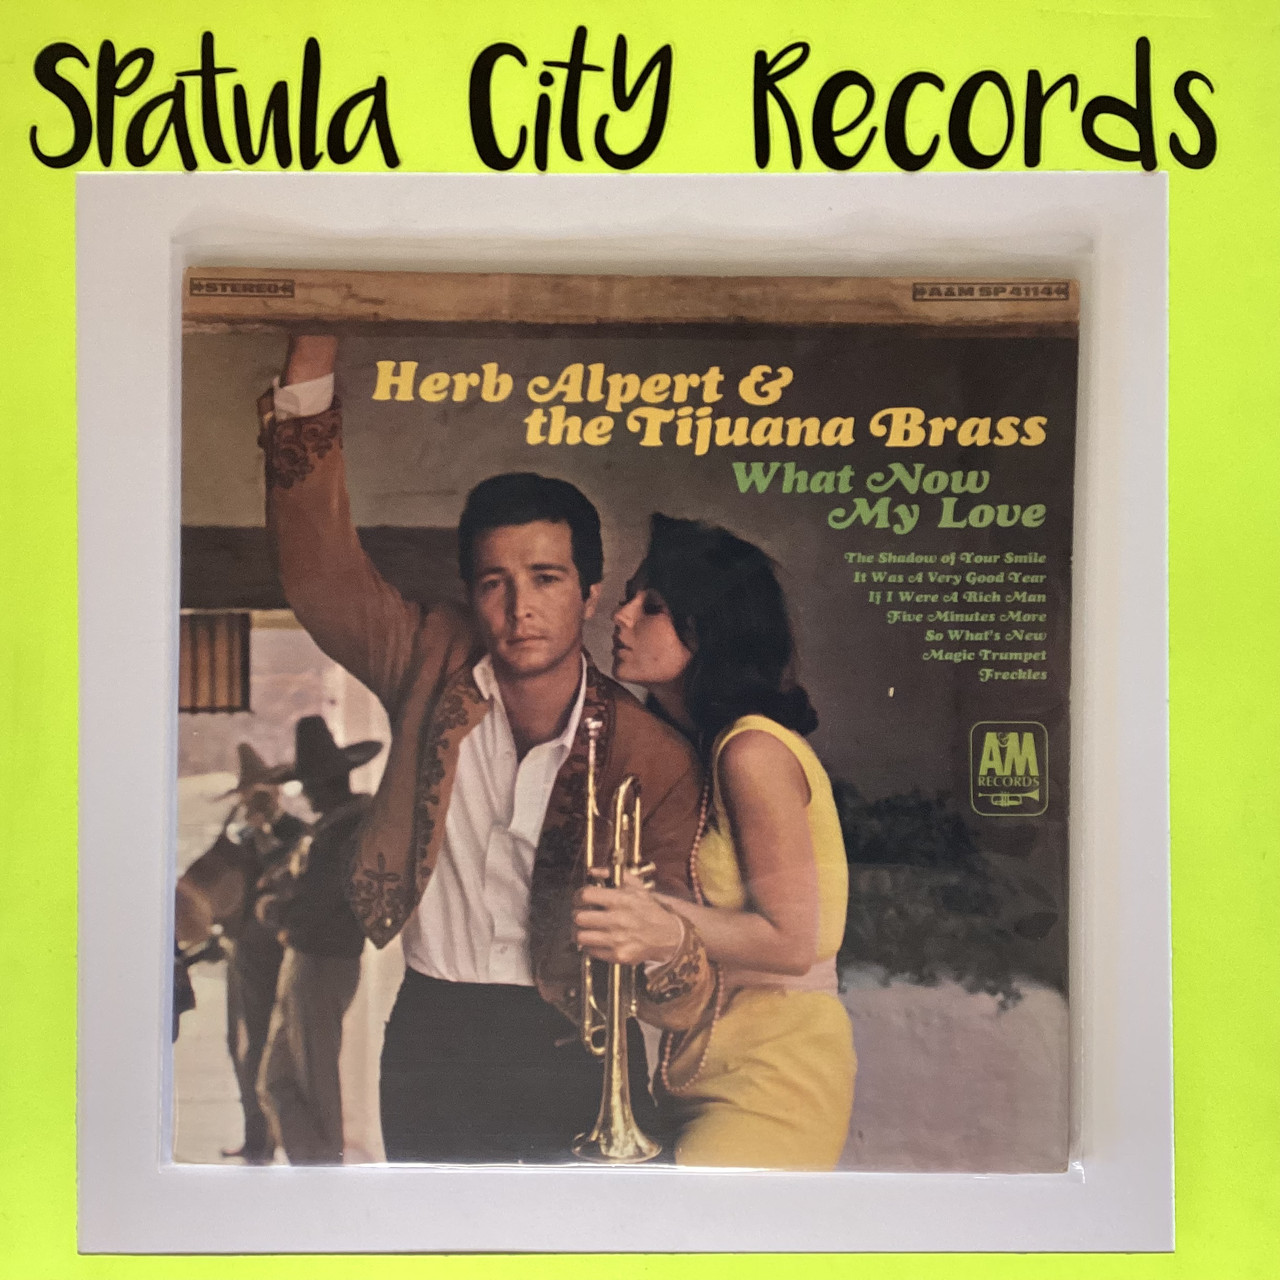 Herb Alpert and the Tijuana Brass - What Now My Love  vinyl record album LP